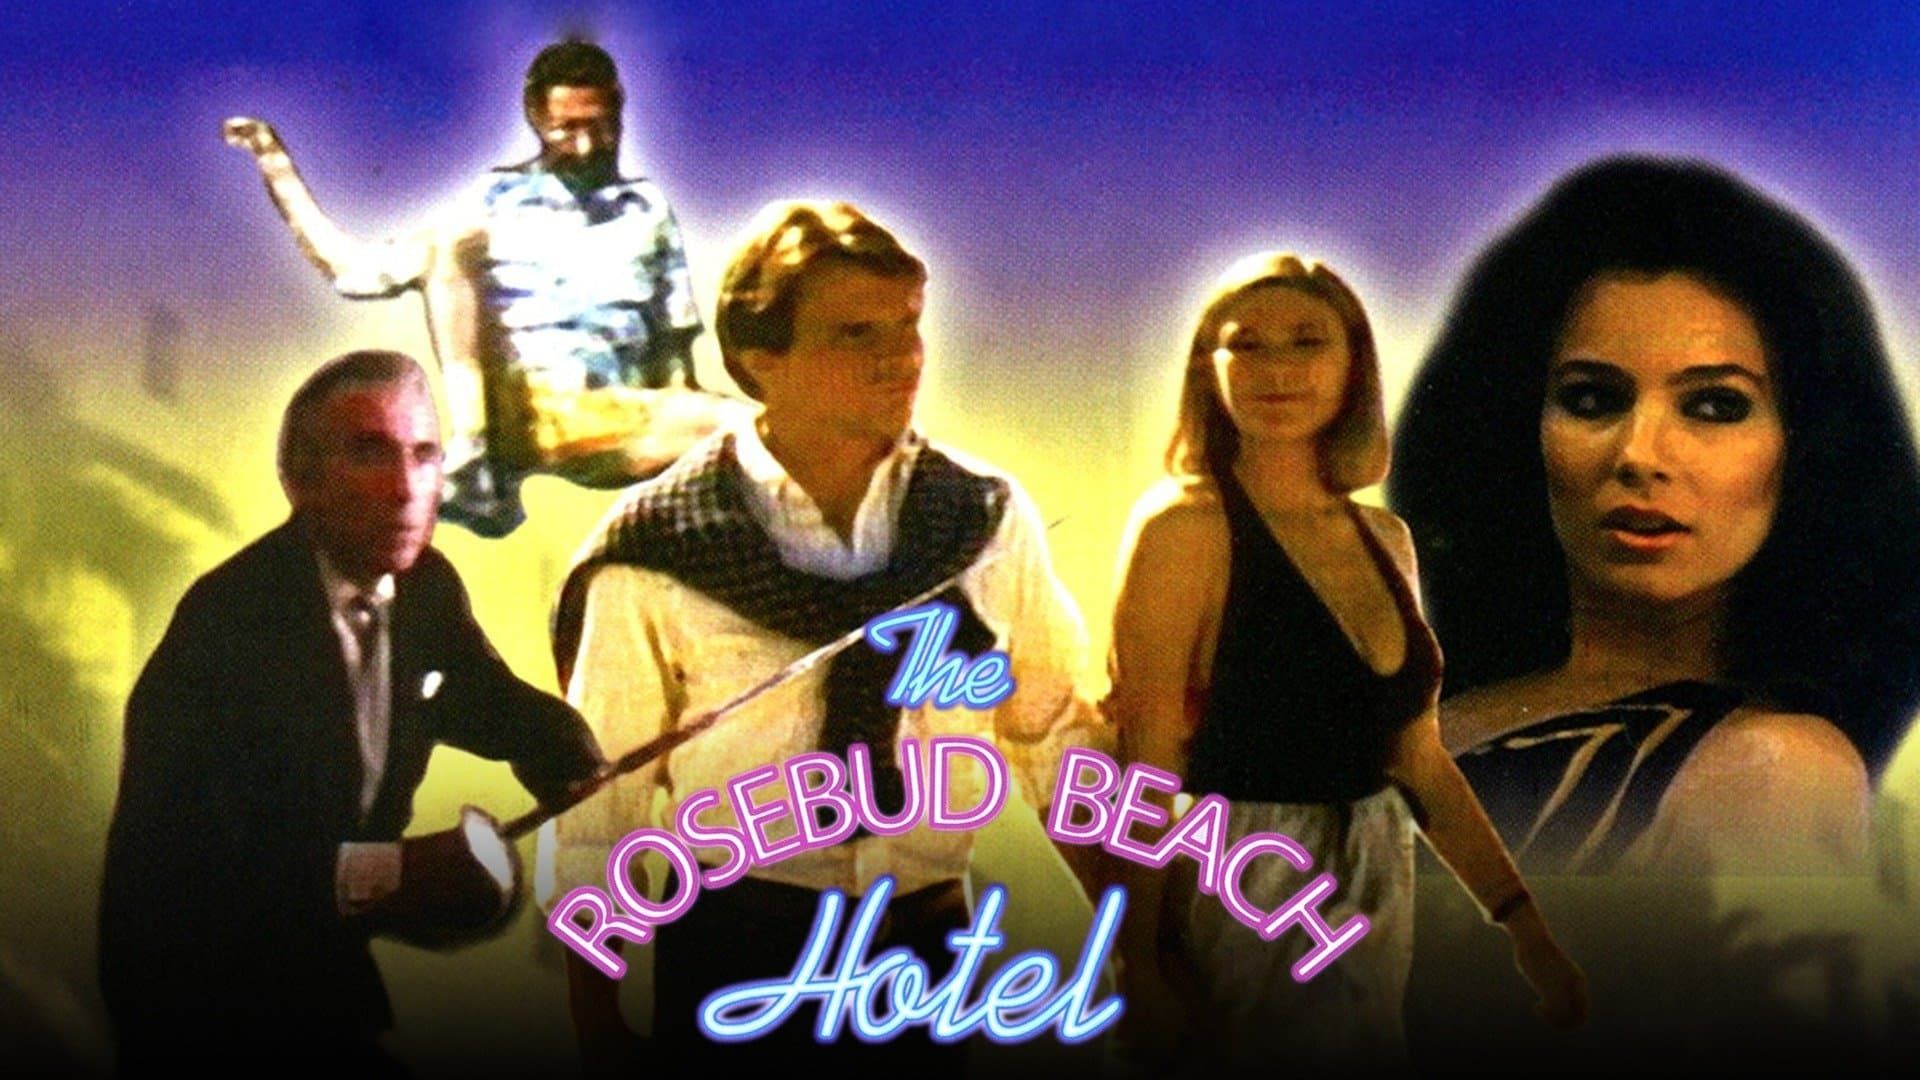 The Rosebud Beach Hotel background